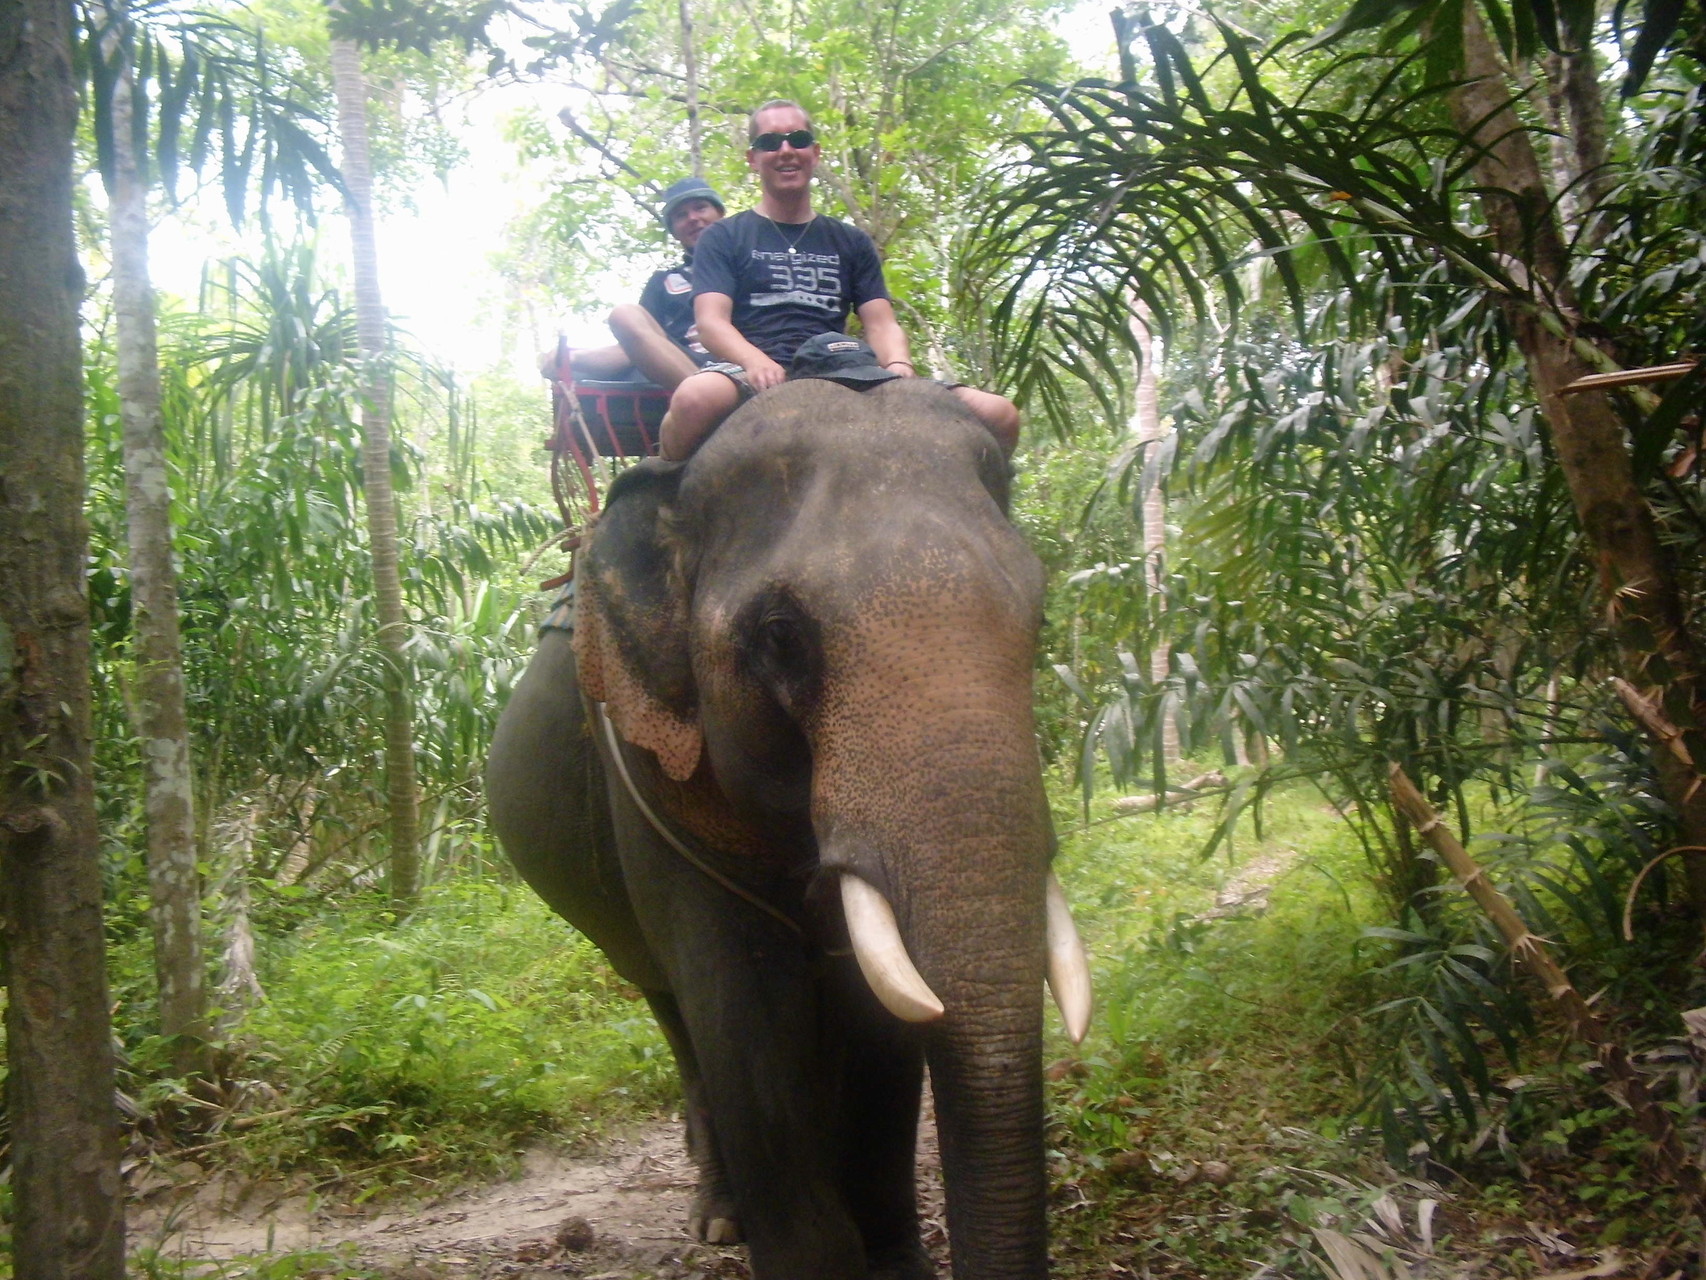 Elefantenreiten im inneren Inseldschungel